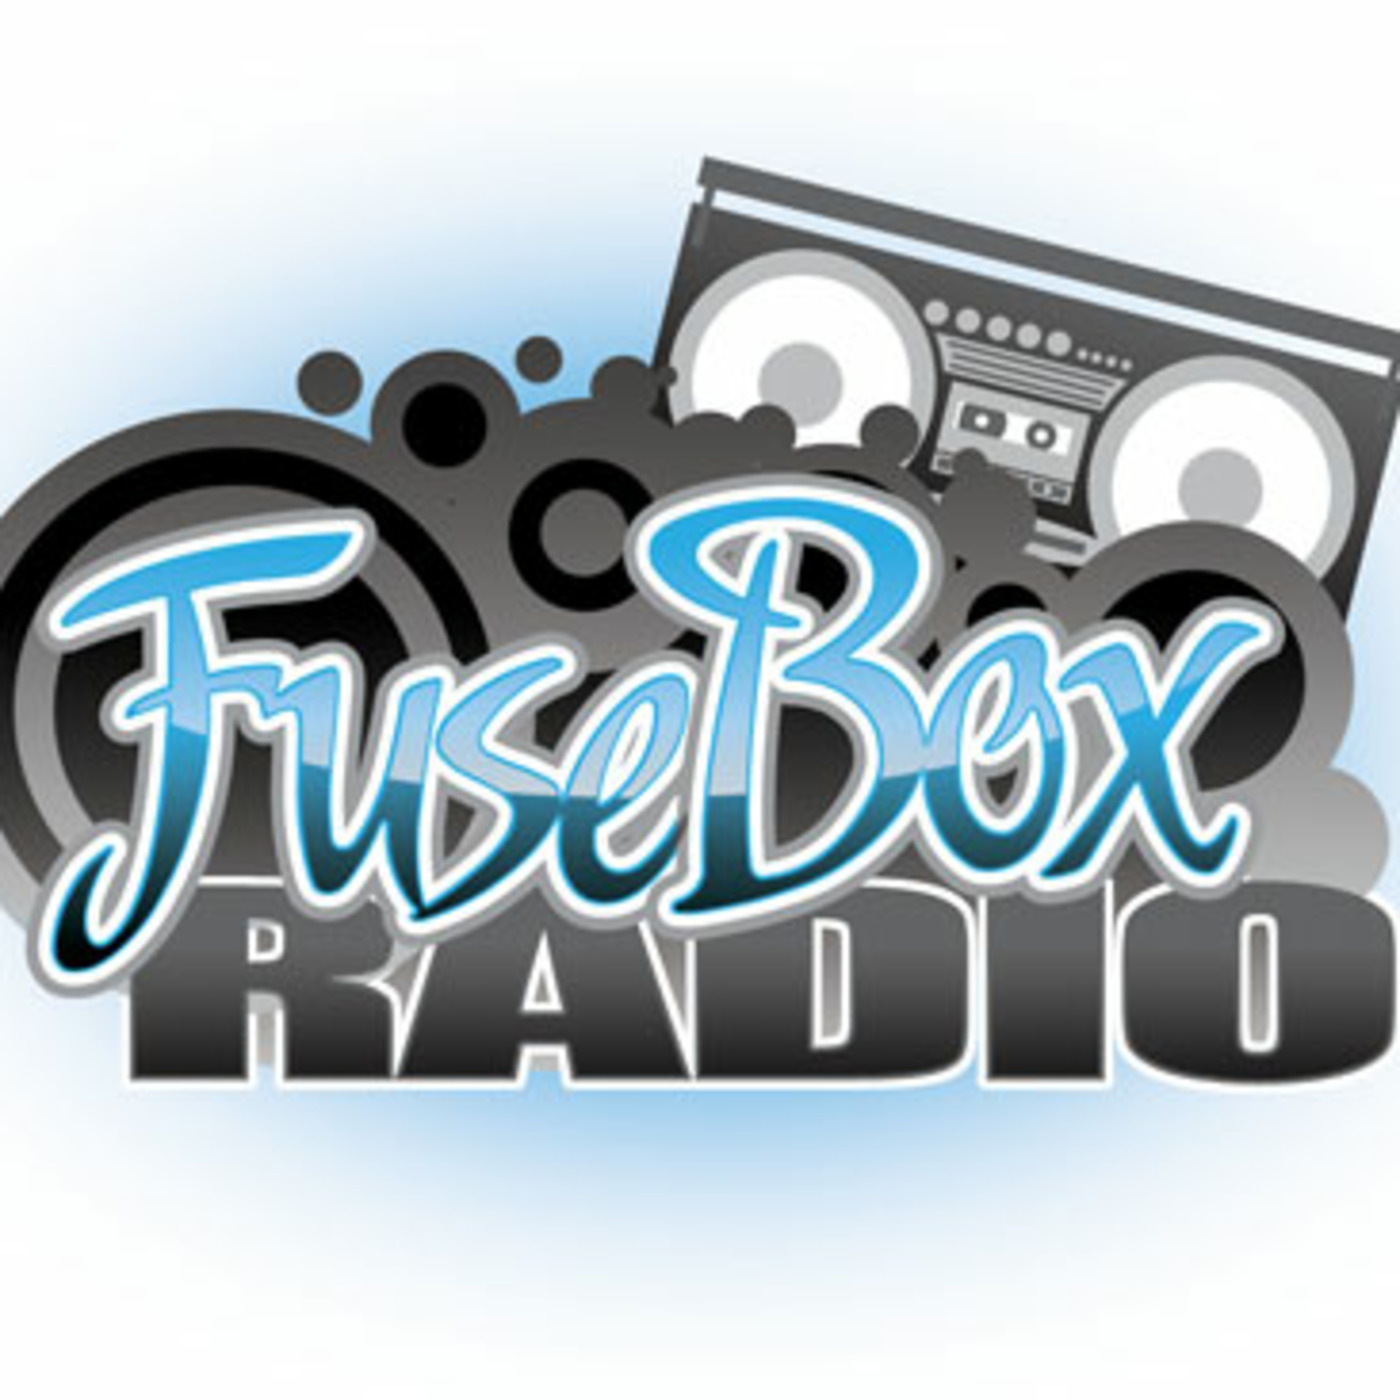 FuseBox Radio Broadcast podcast show image